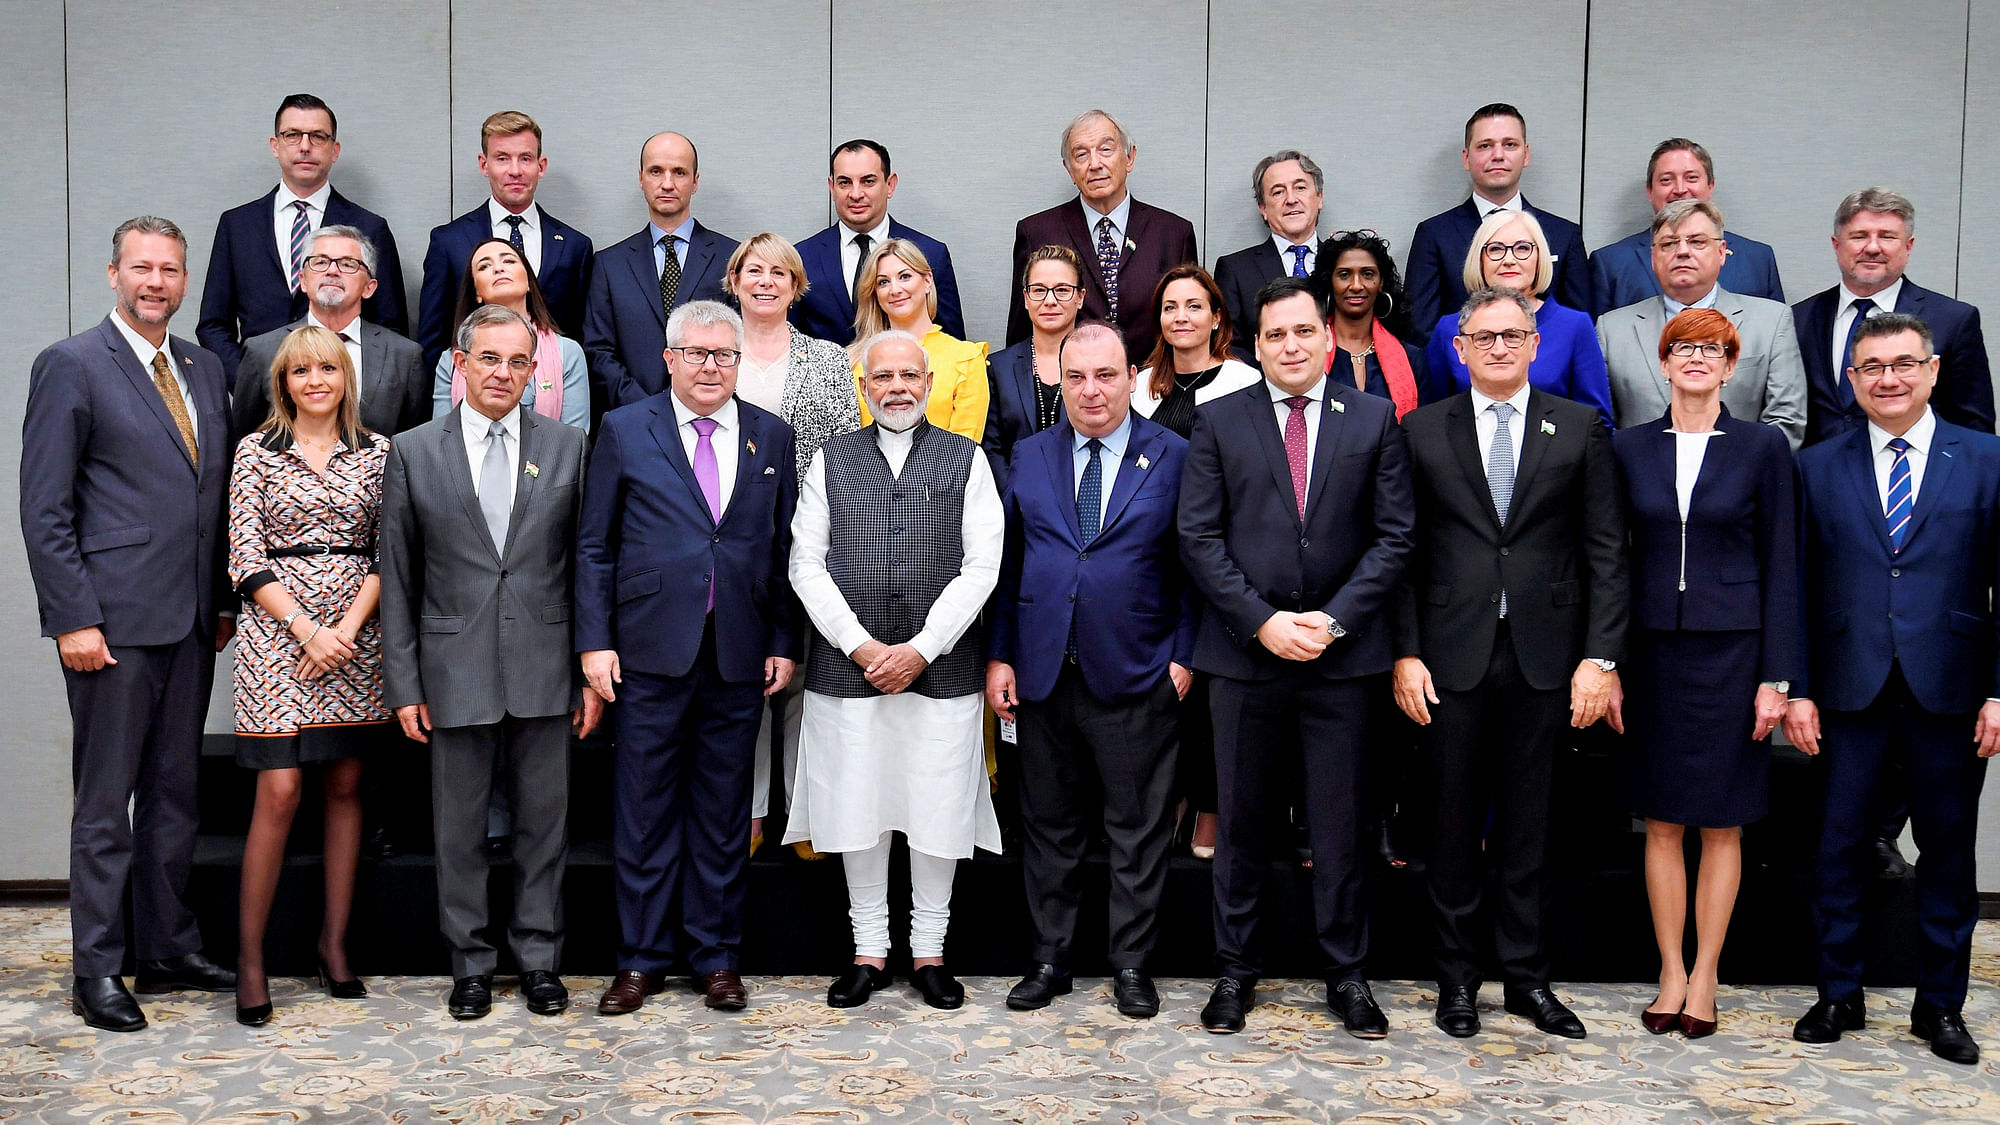 On Monday, the MPs met Prime Minister Narendra Modi in Delhi.